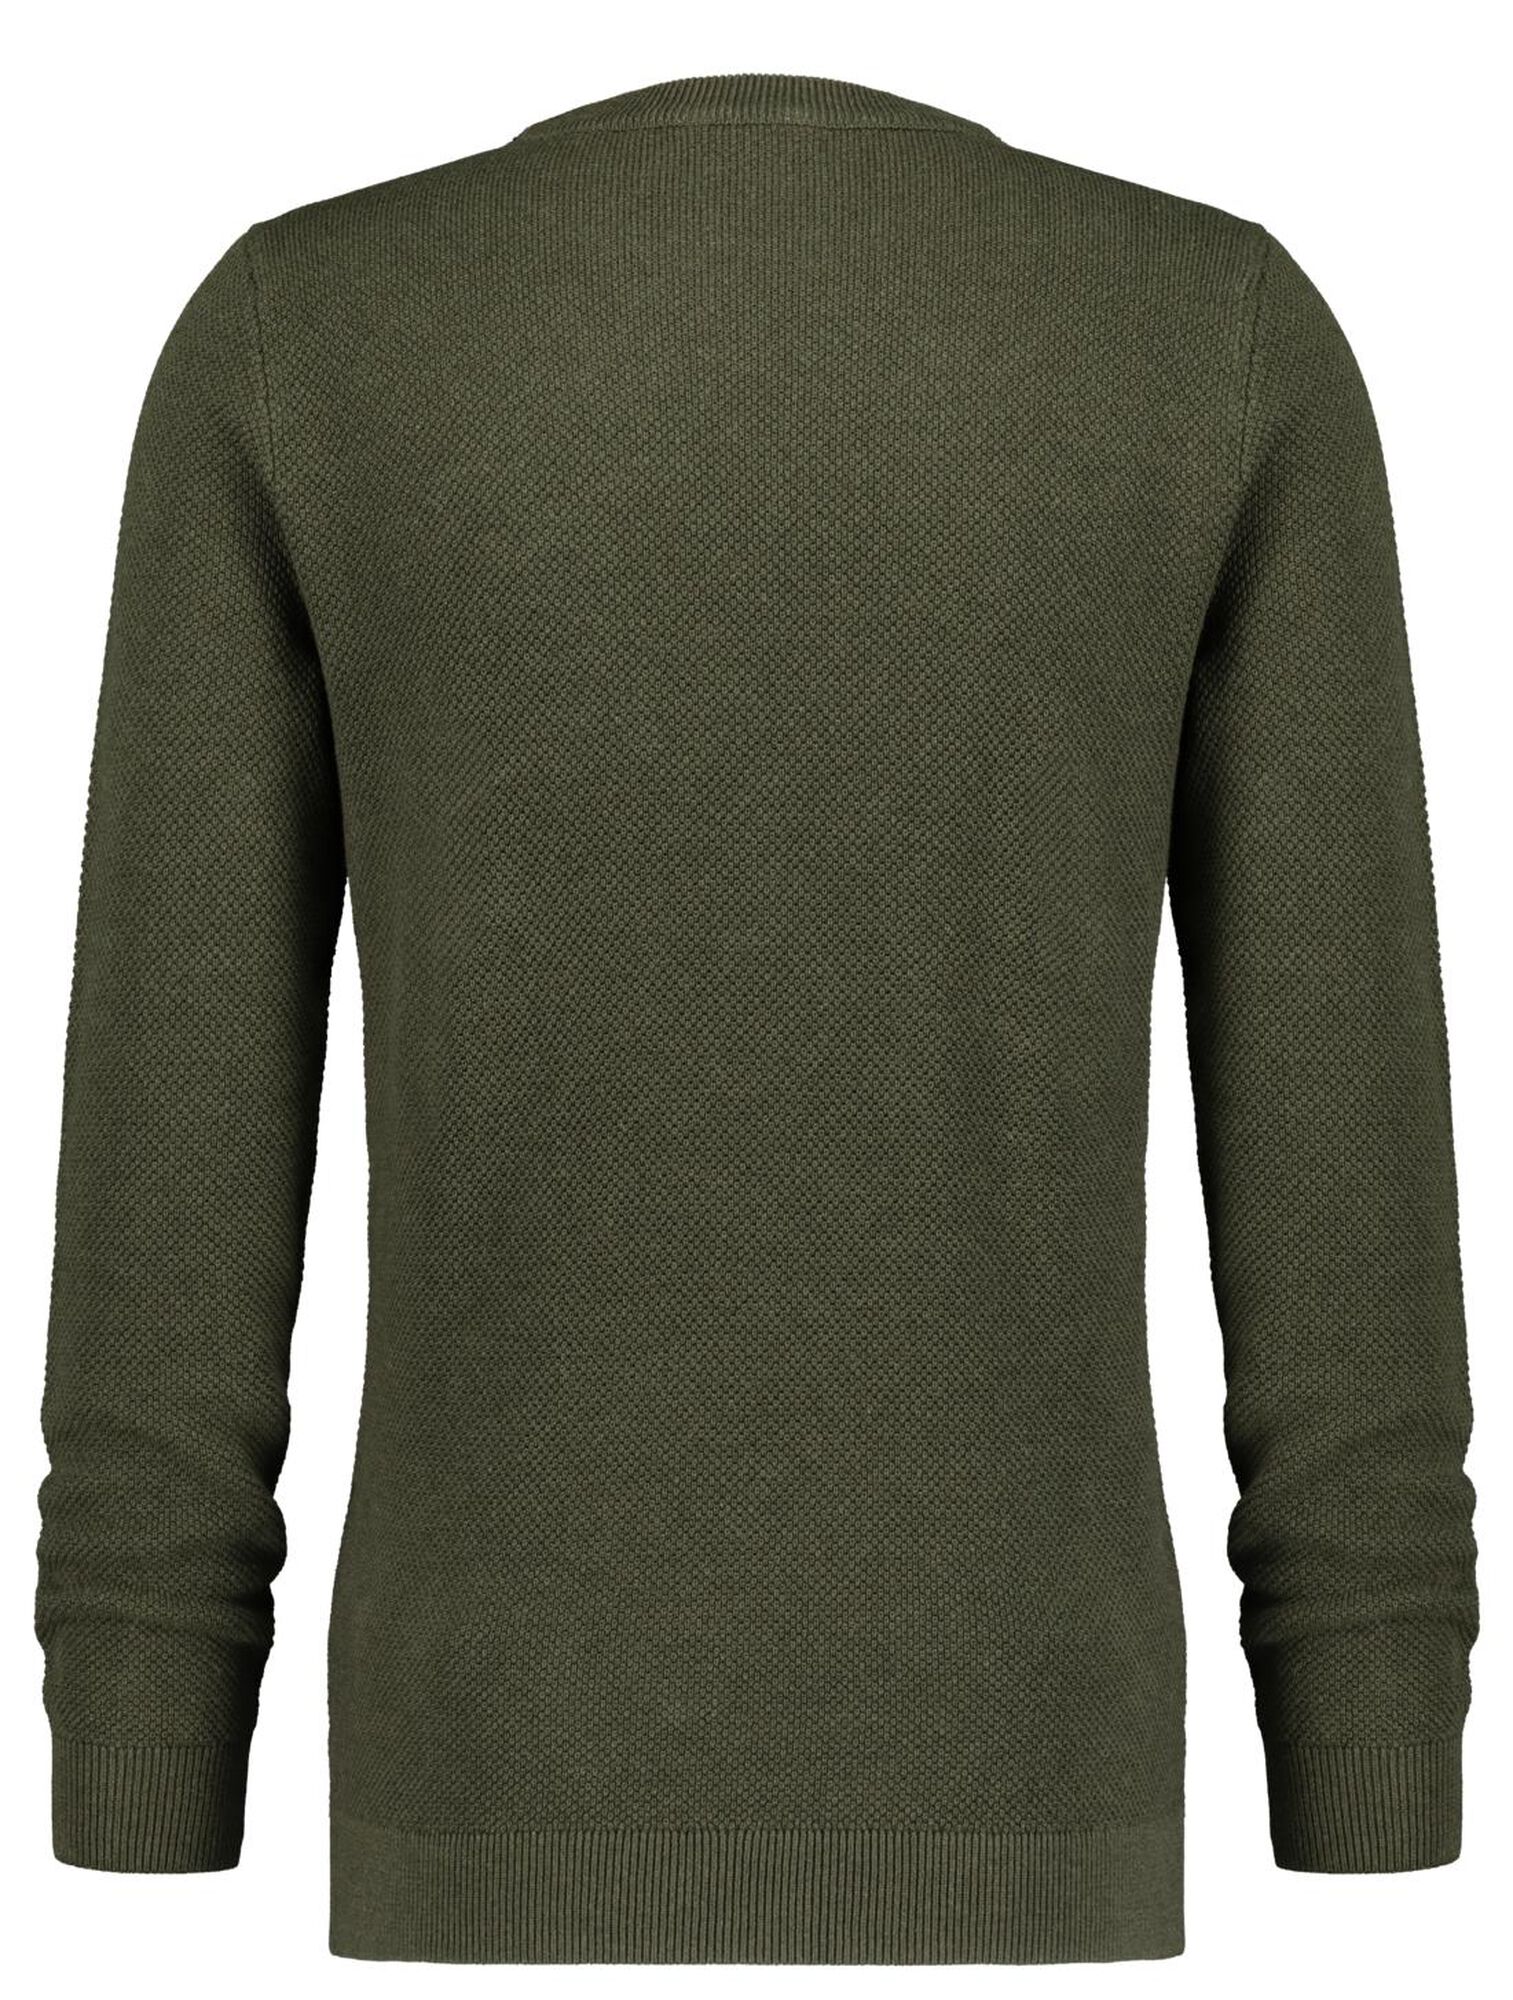 men's sweater structured crew-neck army green - HEMA